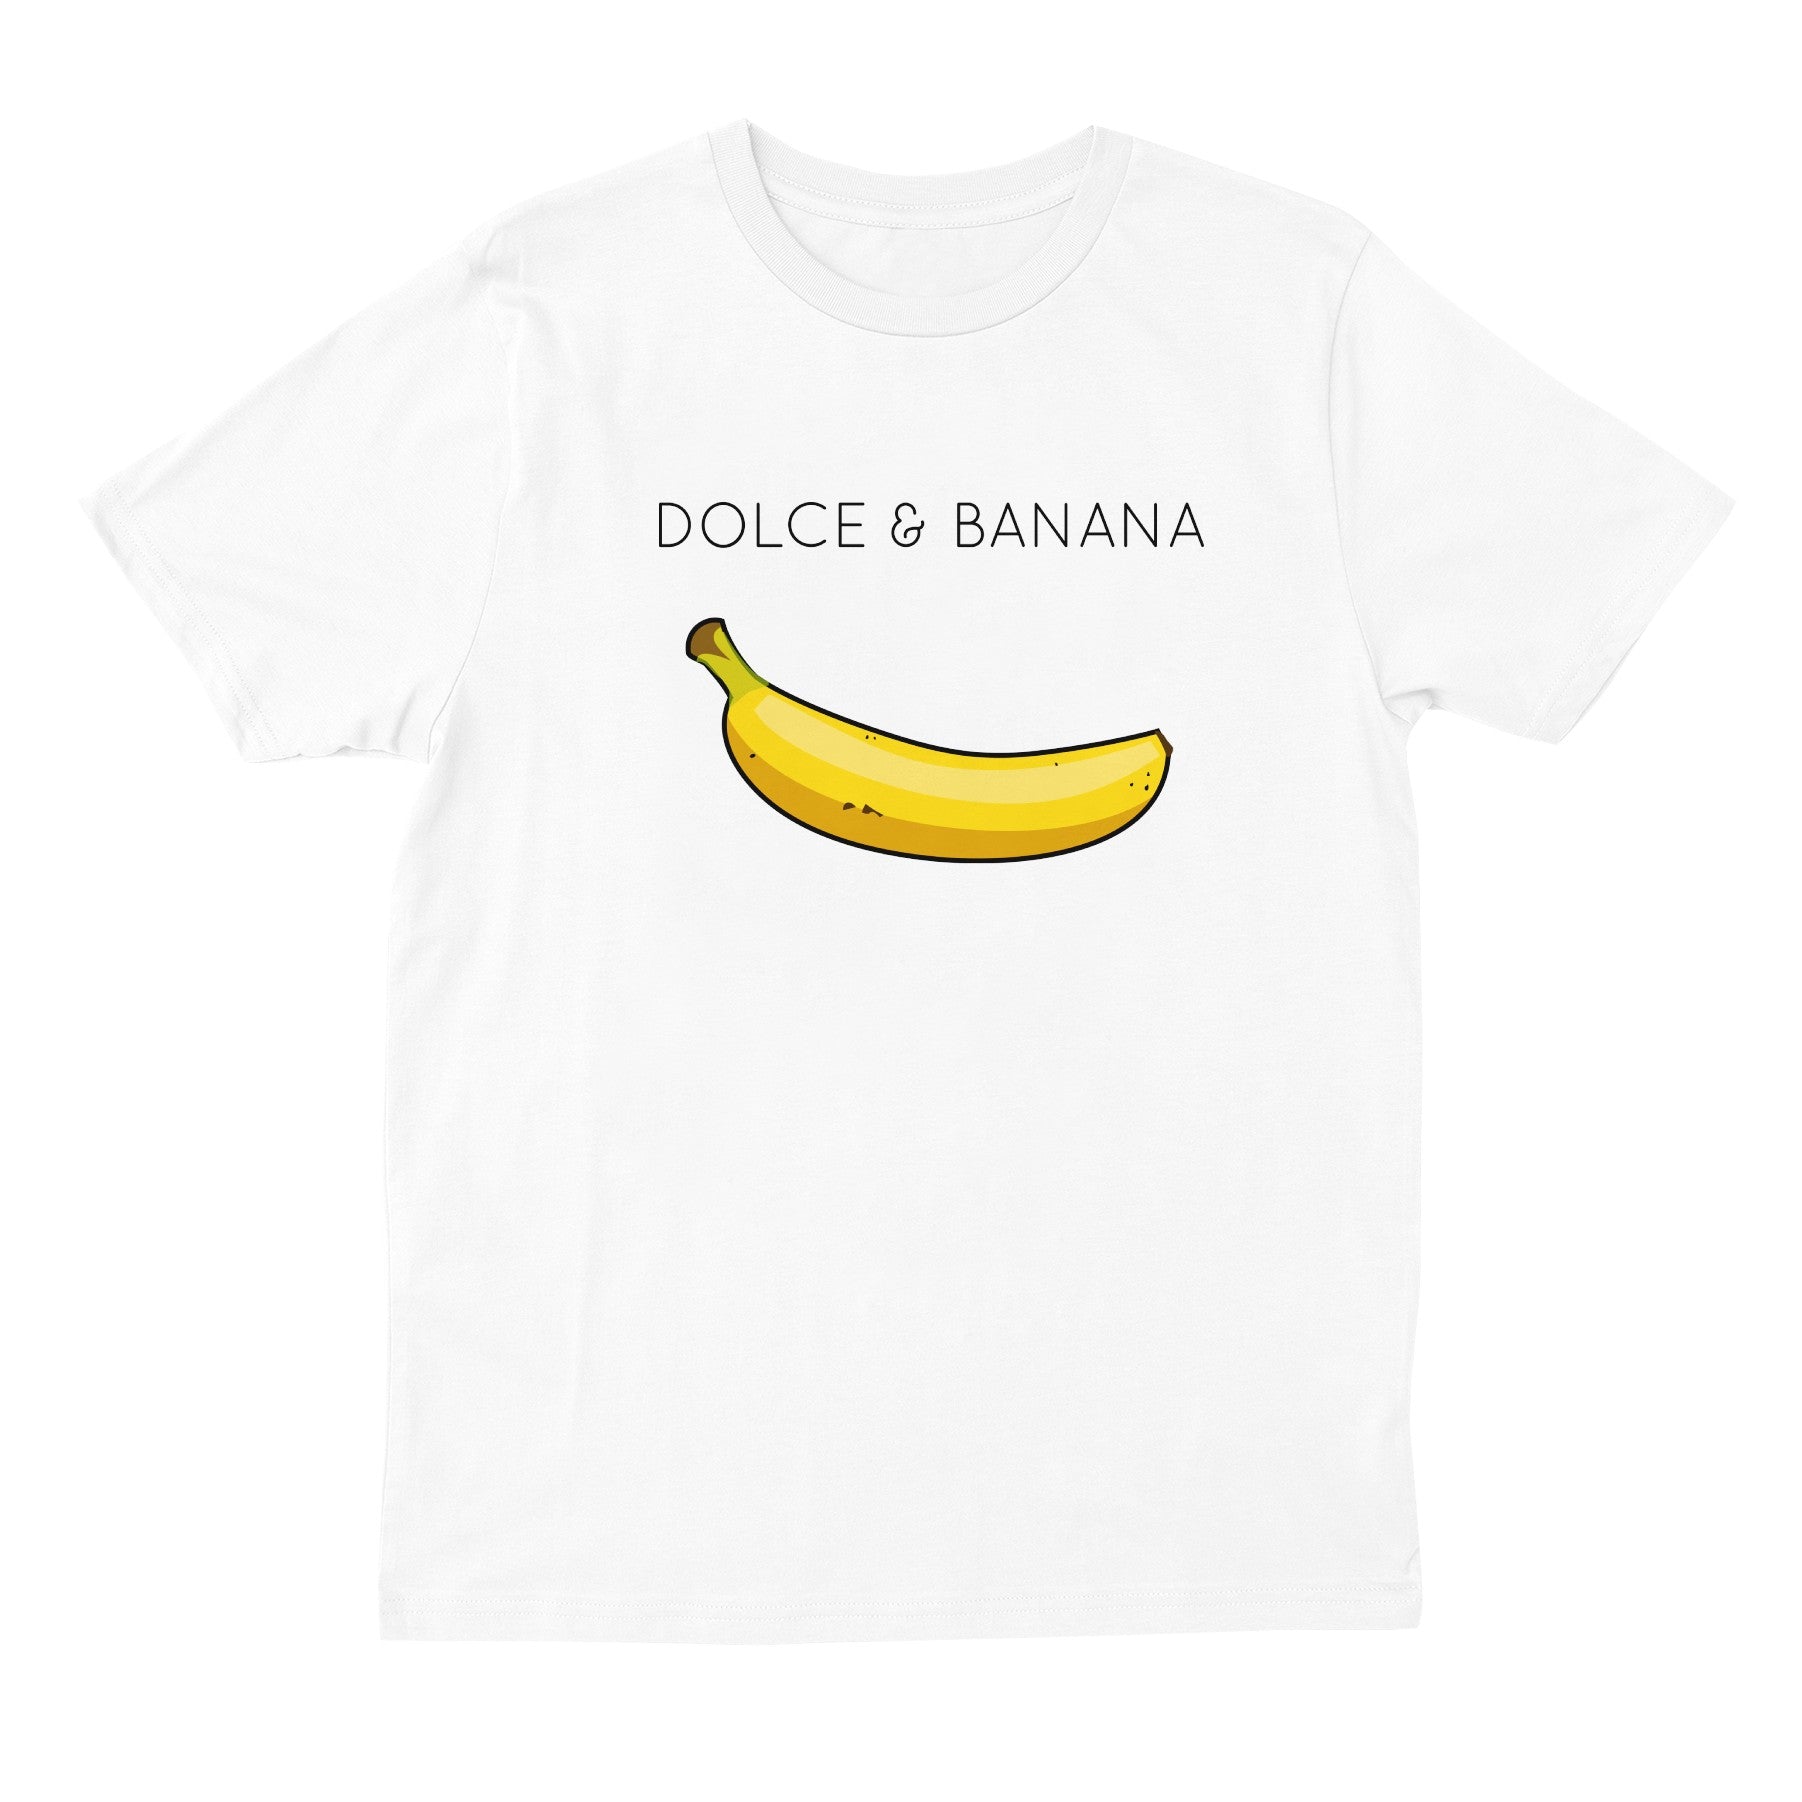 Dolce & Banana T-shirt - white